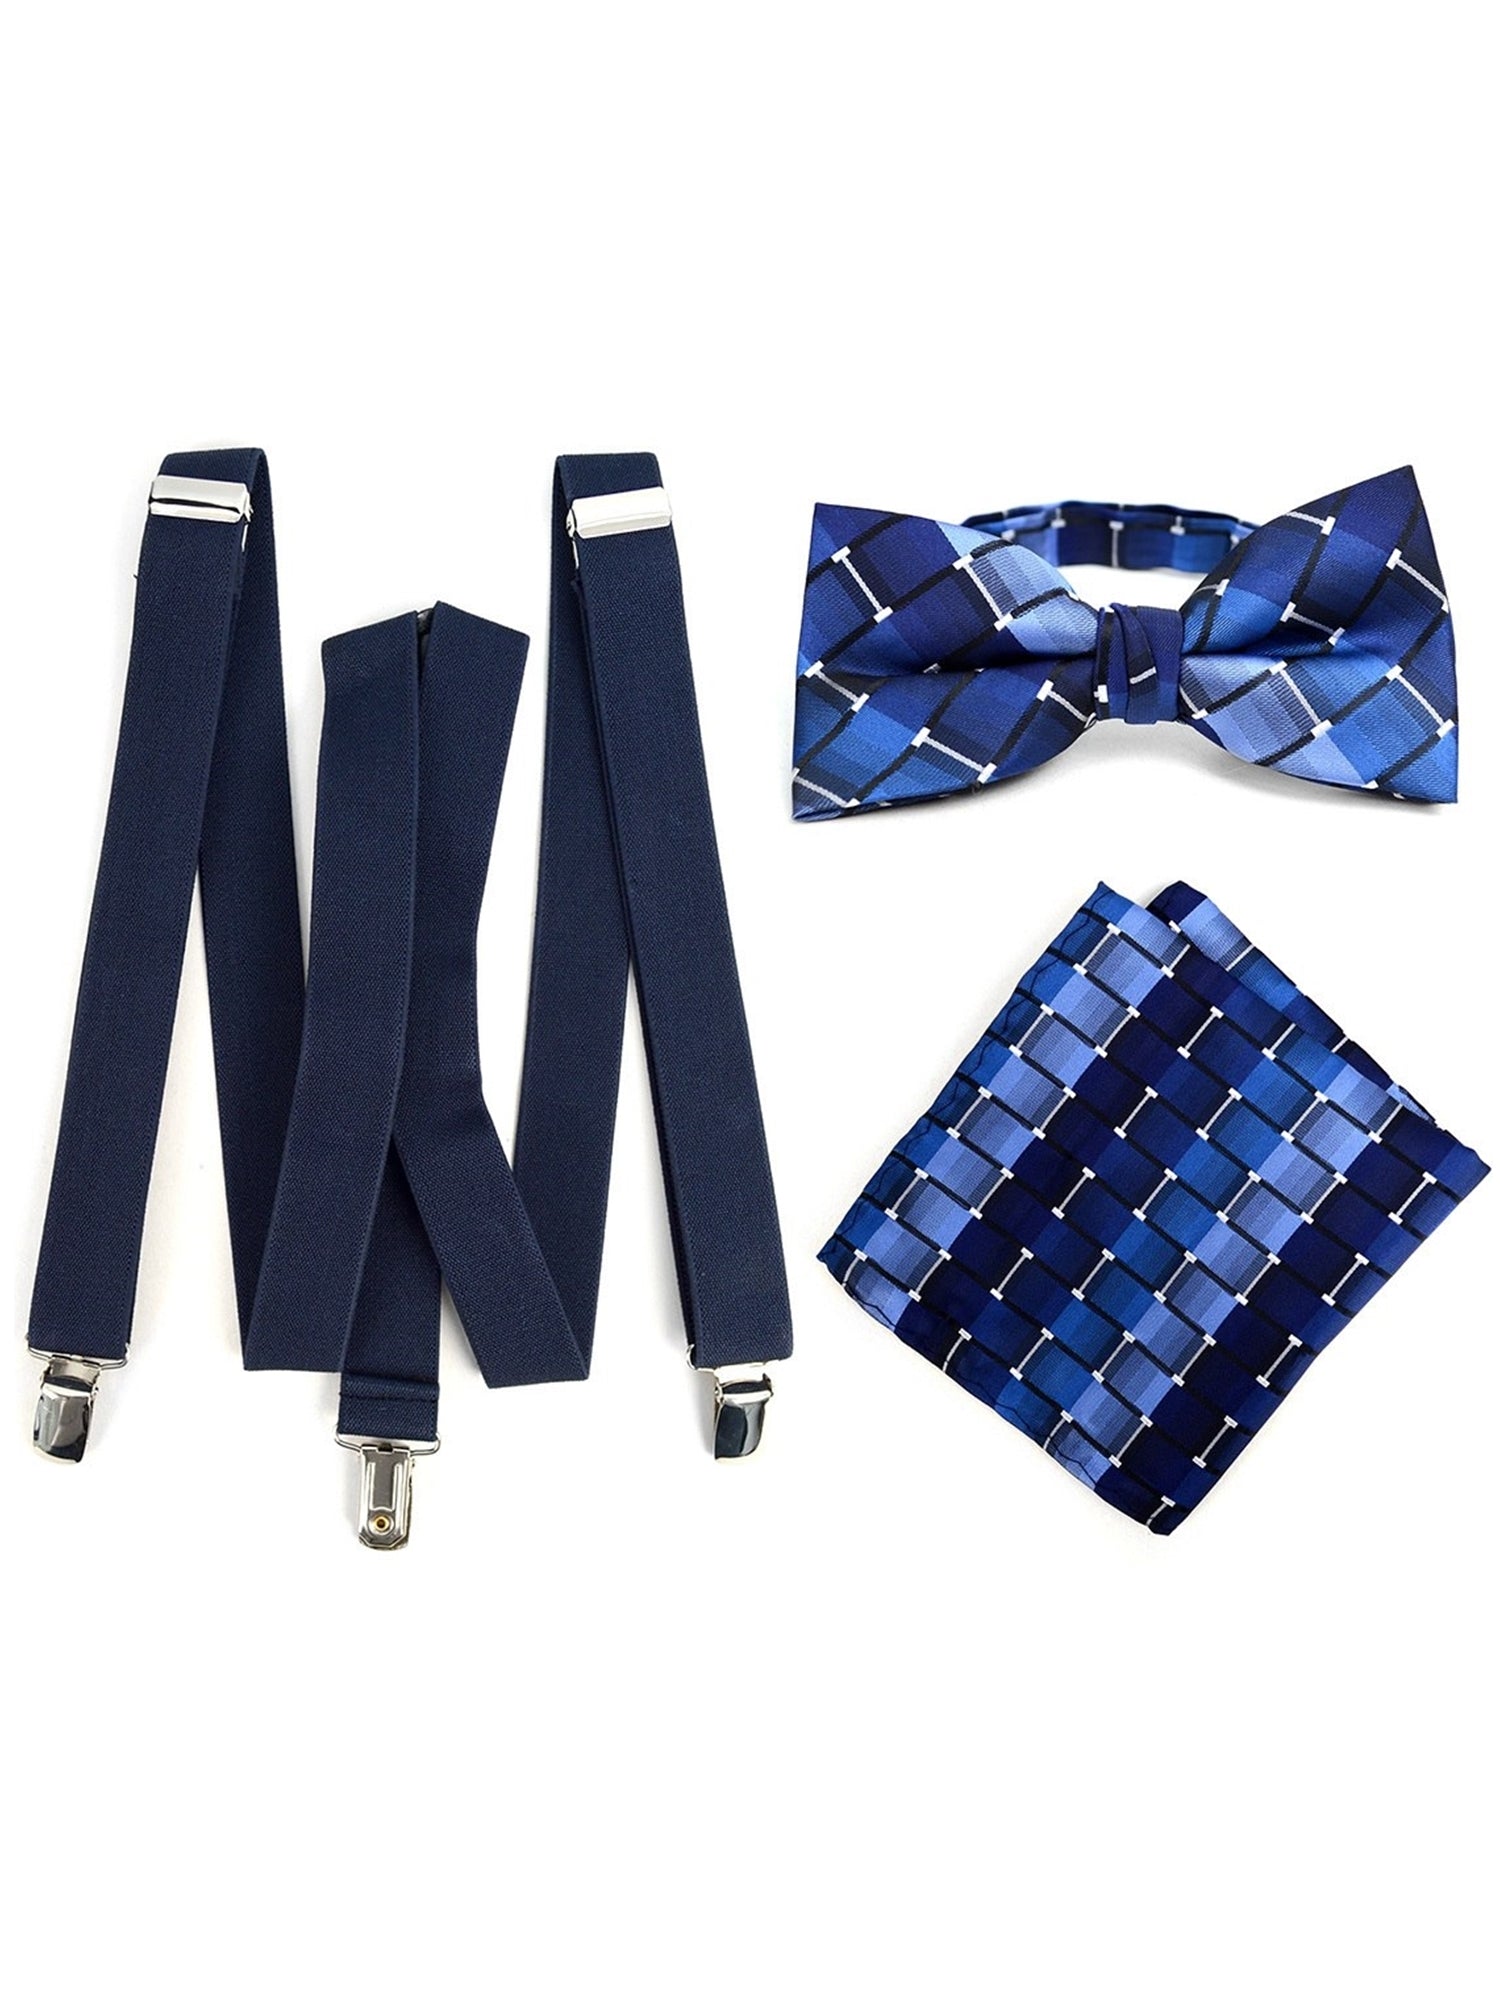 Men's Navy Blue 3 PC Clip-on Suspenders, Bow Tie & Hanky Sets Men's Solid Color Bow Tie TheDapperTie Navy Blue # 1 Regular 